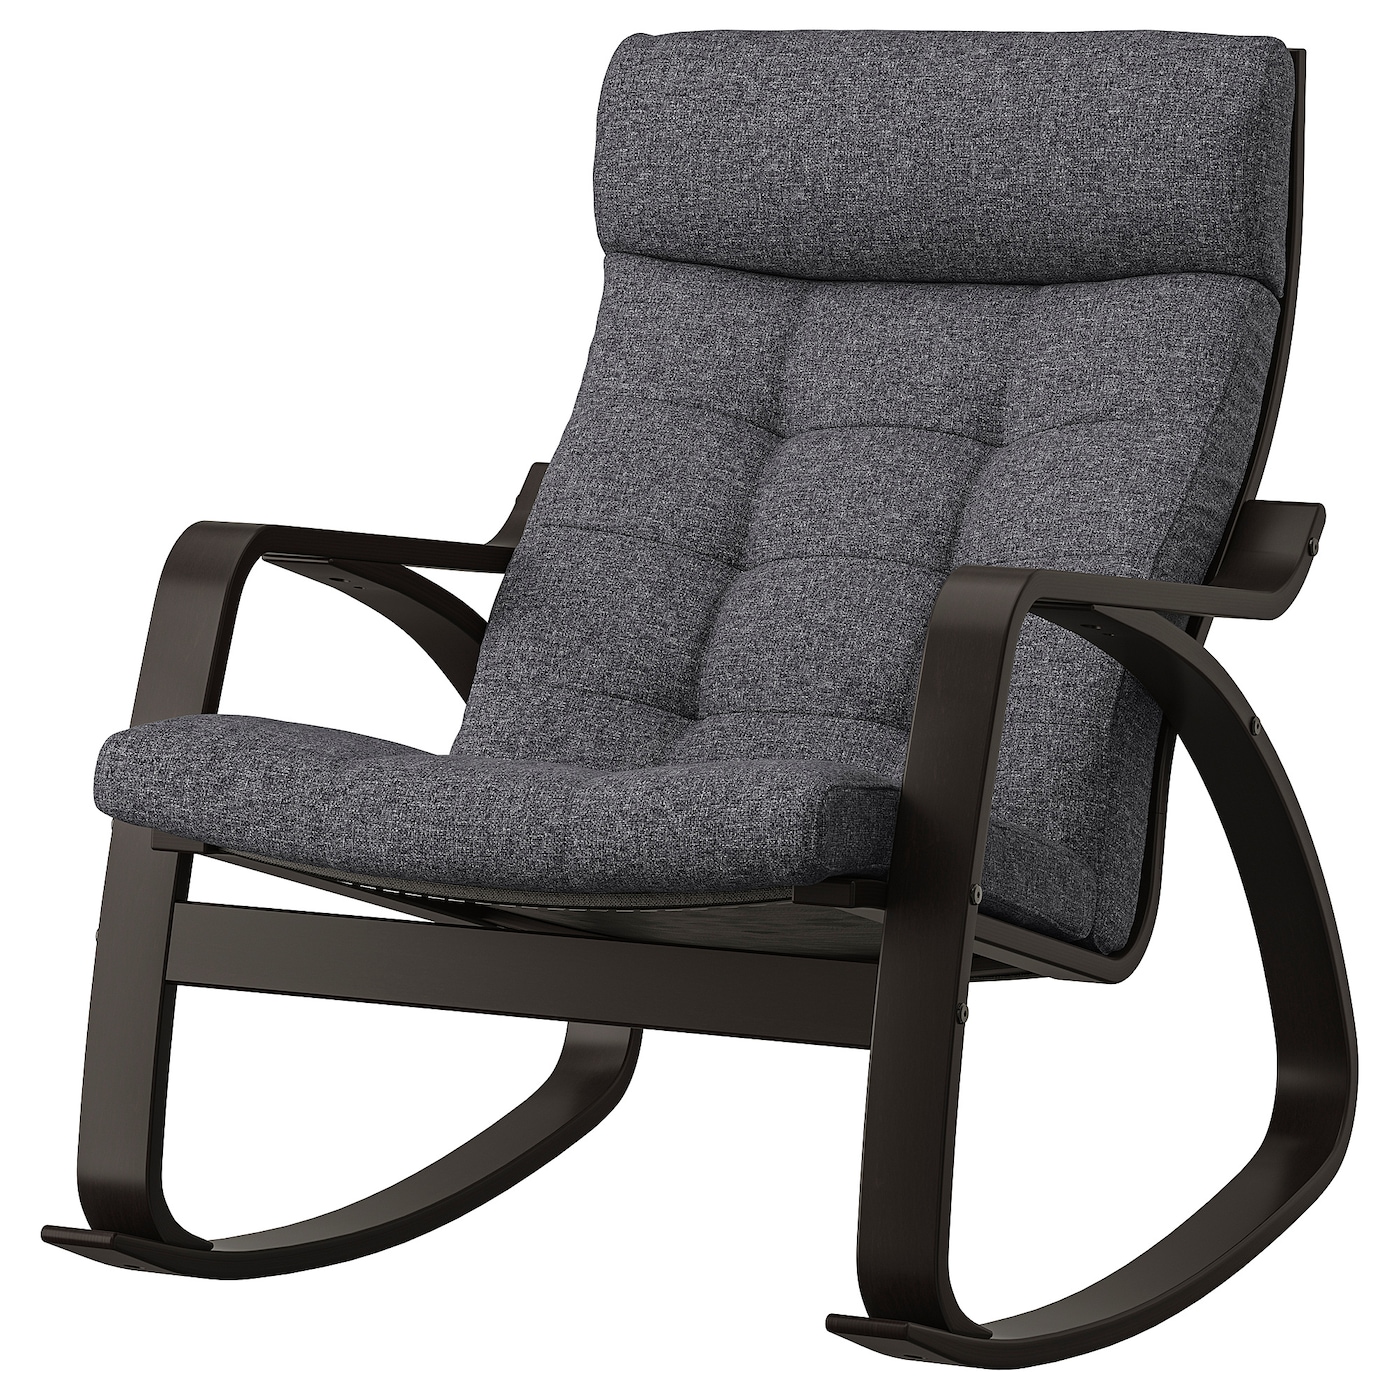 ПОЭНГ Кресло-качалка, черно-коричневый/Гуннаред темно-серый POÄNG IKEA кресло качалка берген